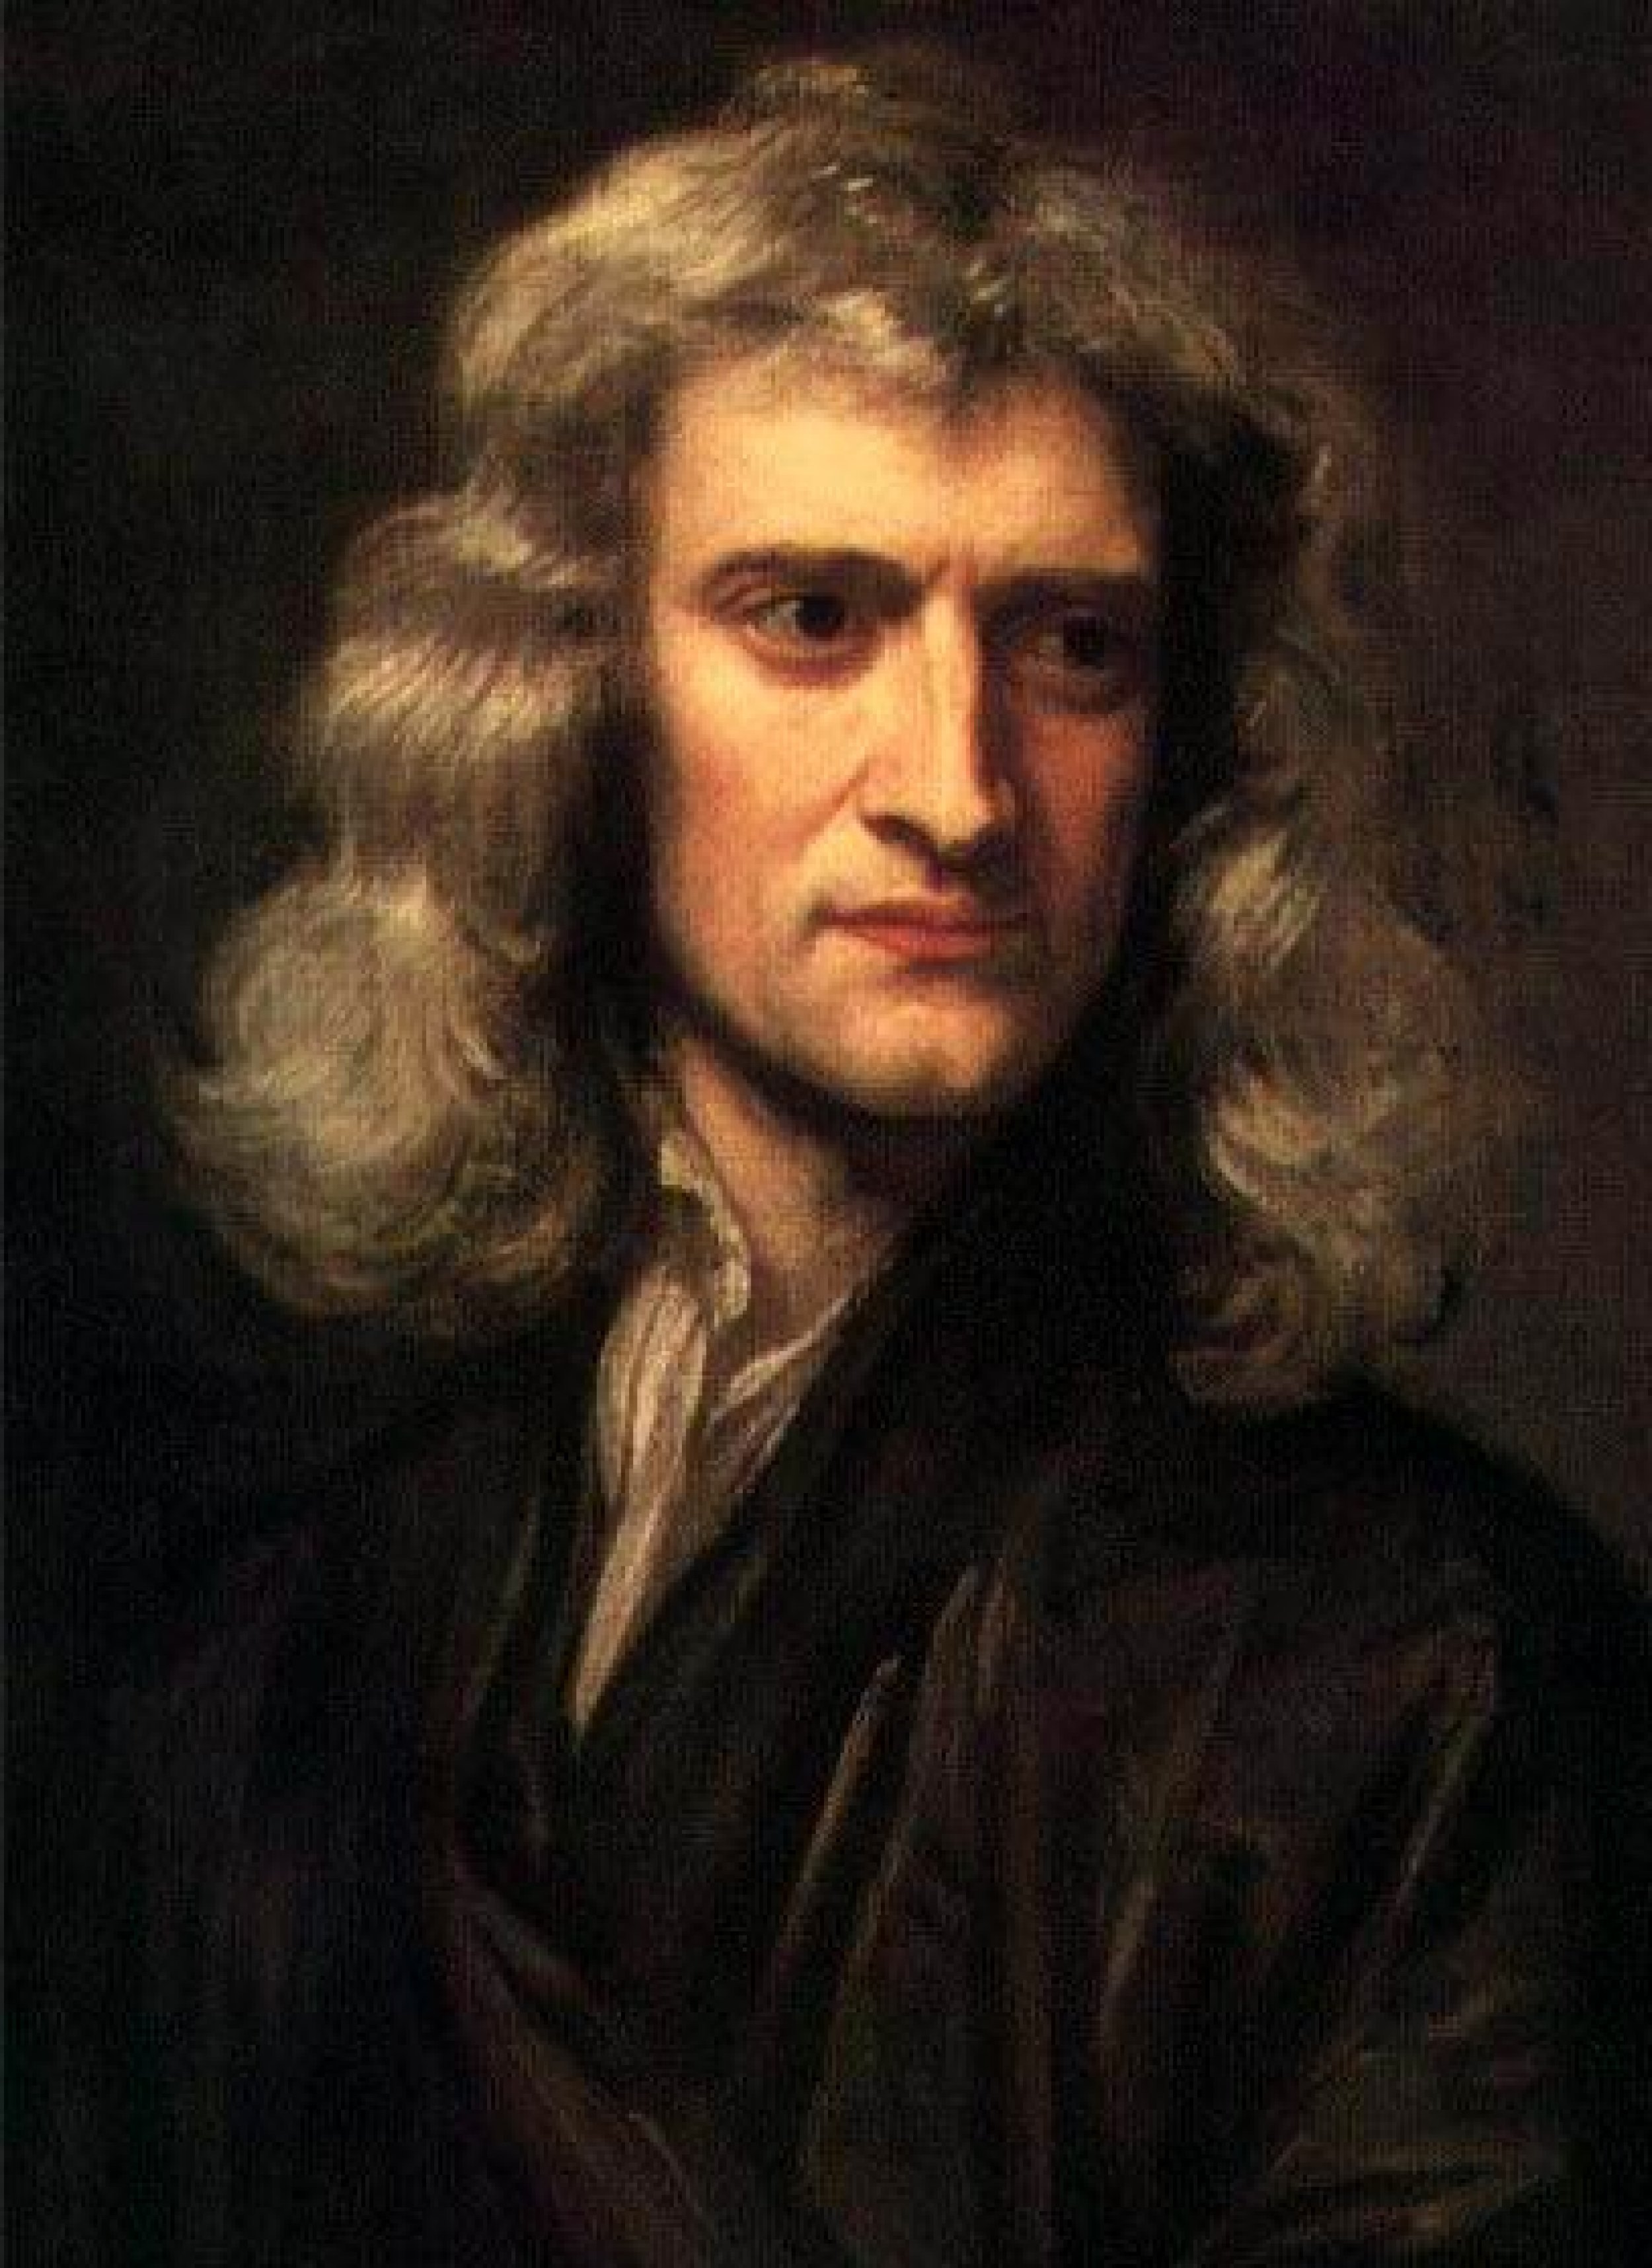 Isaac Newton 1643-1727 physicist